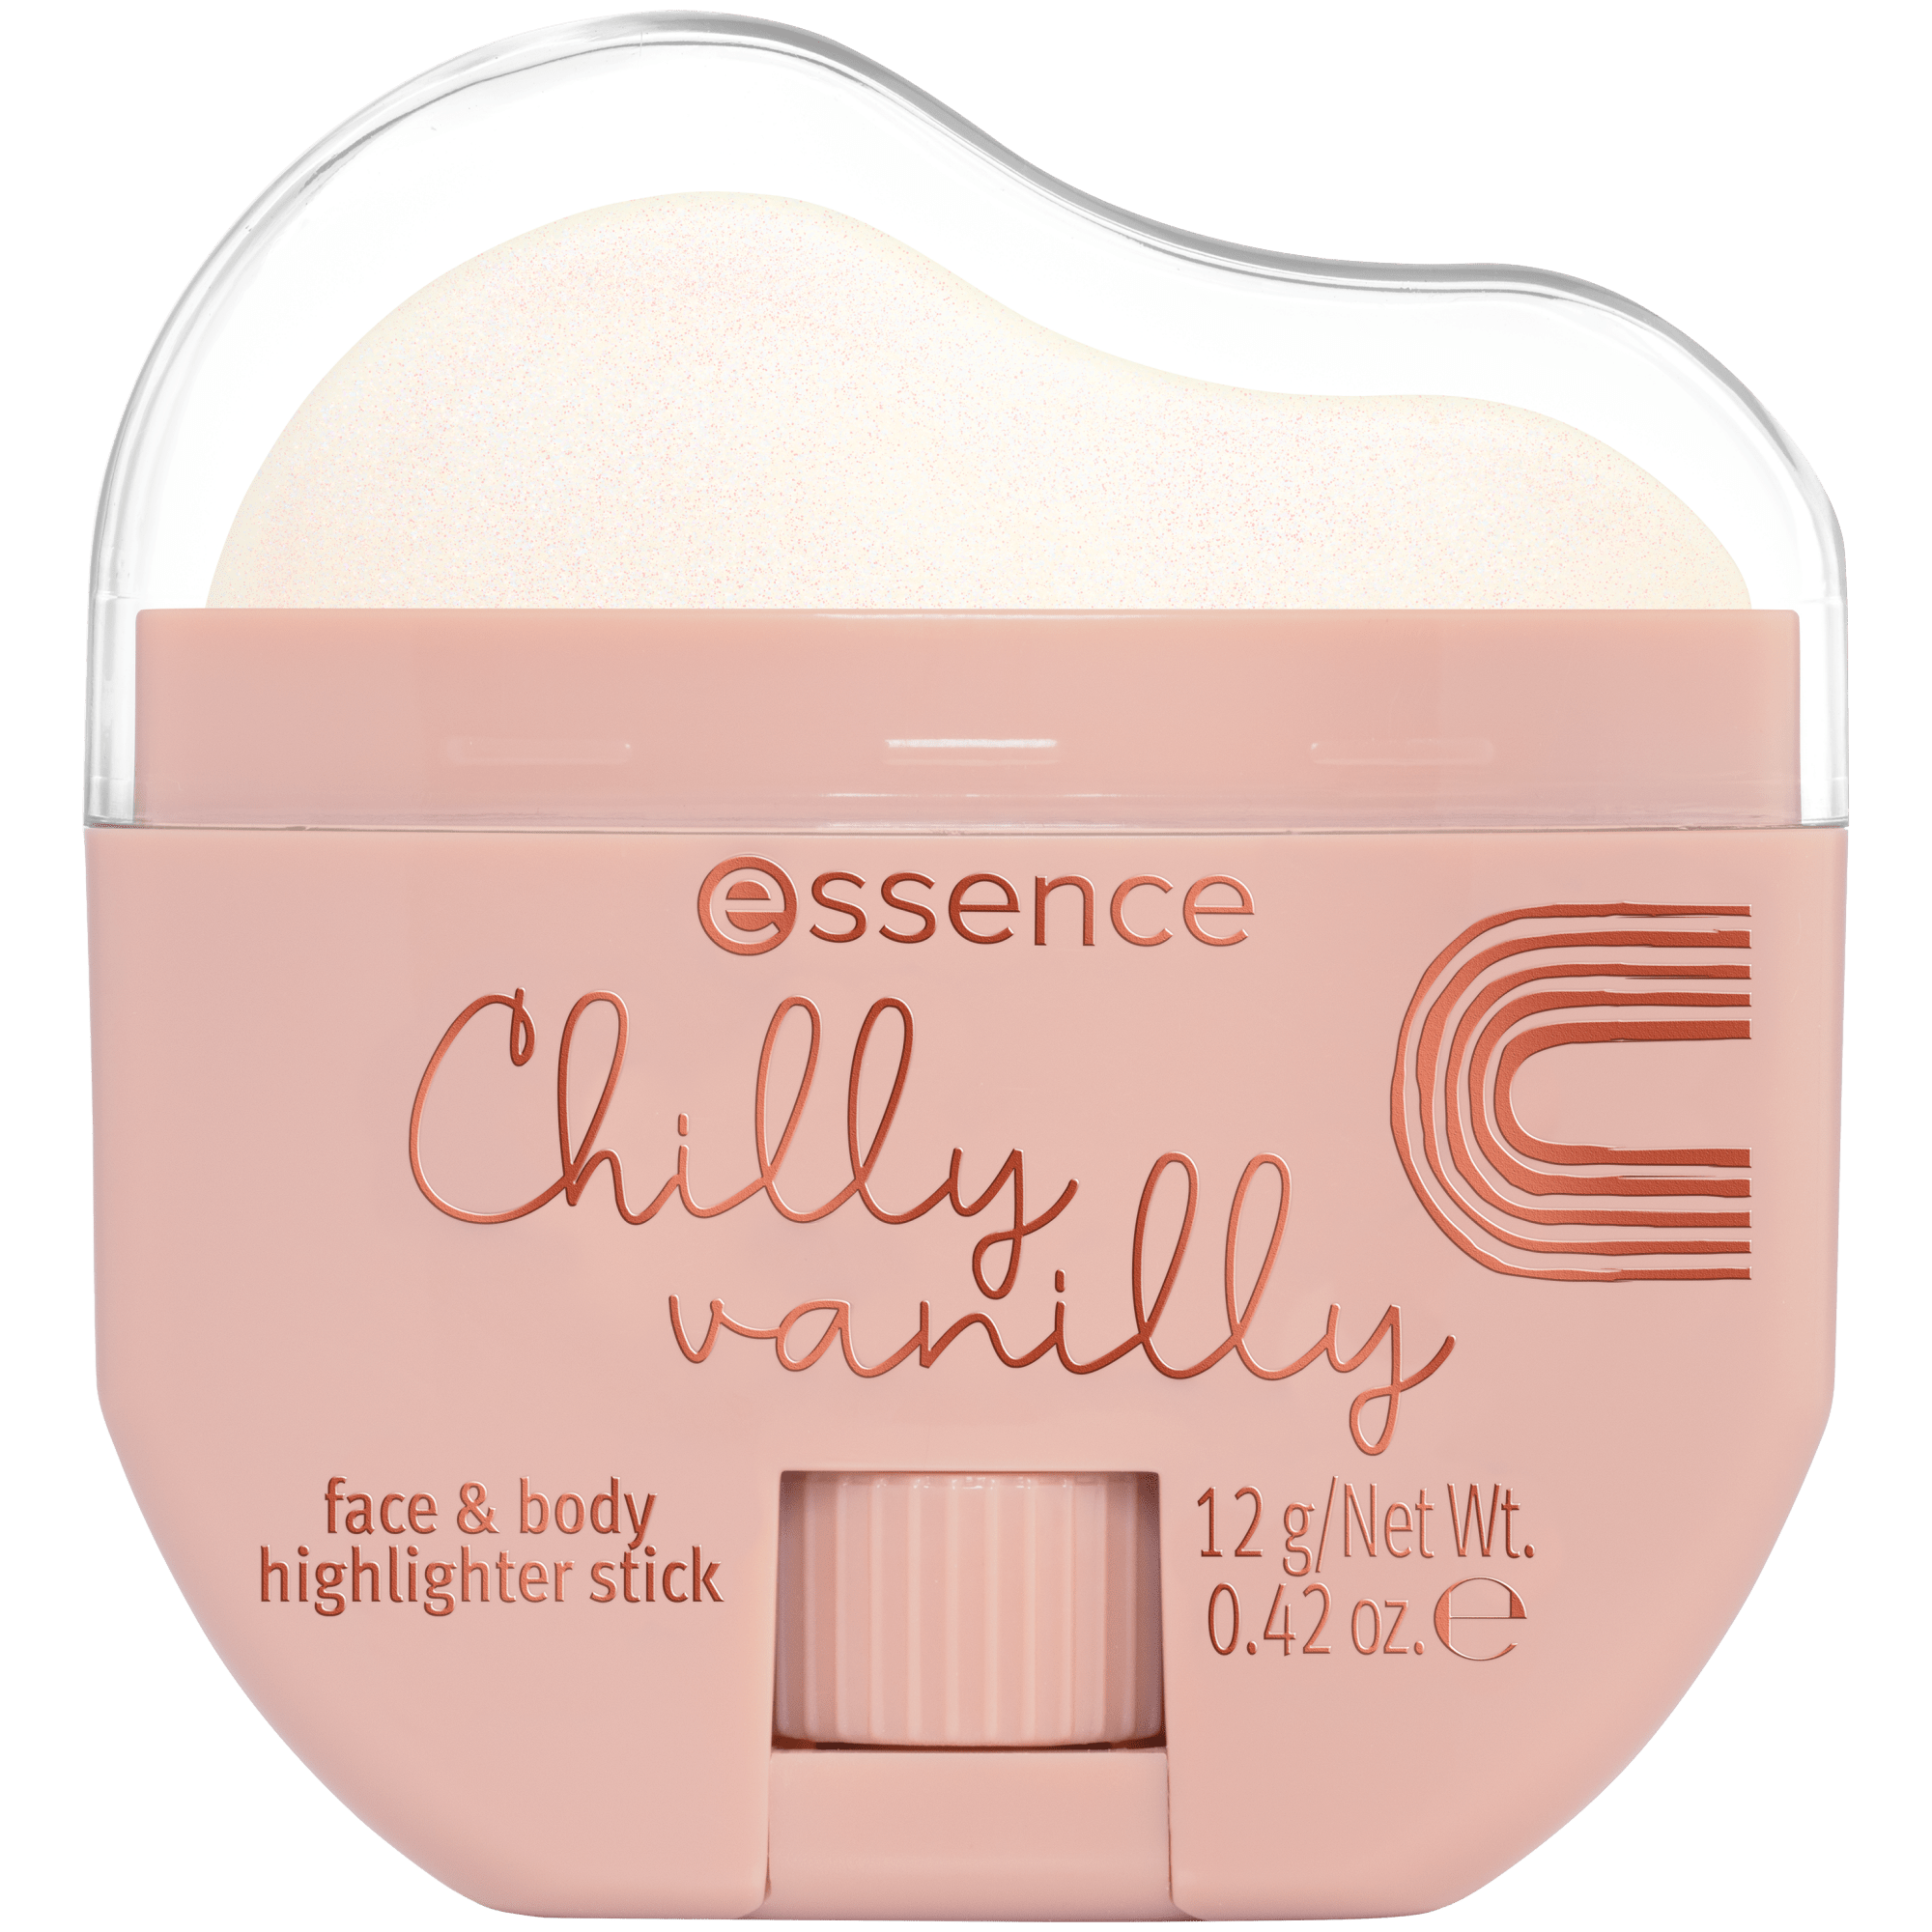 essence-Chilly-vanilly-face-body-highlighter-stick-01